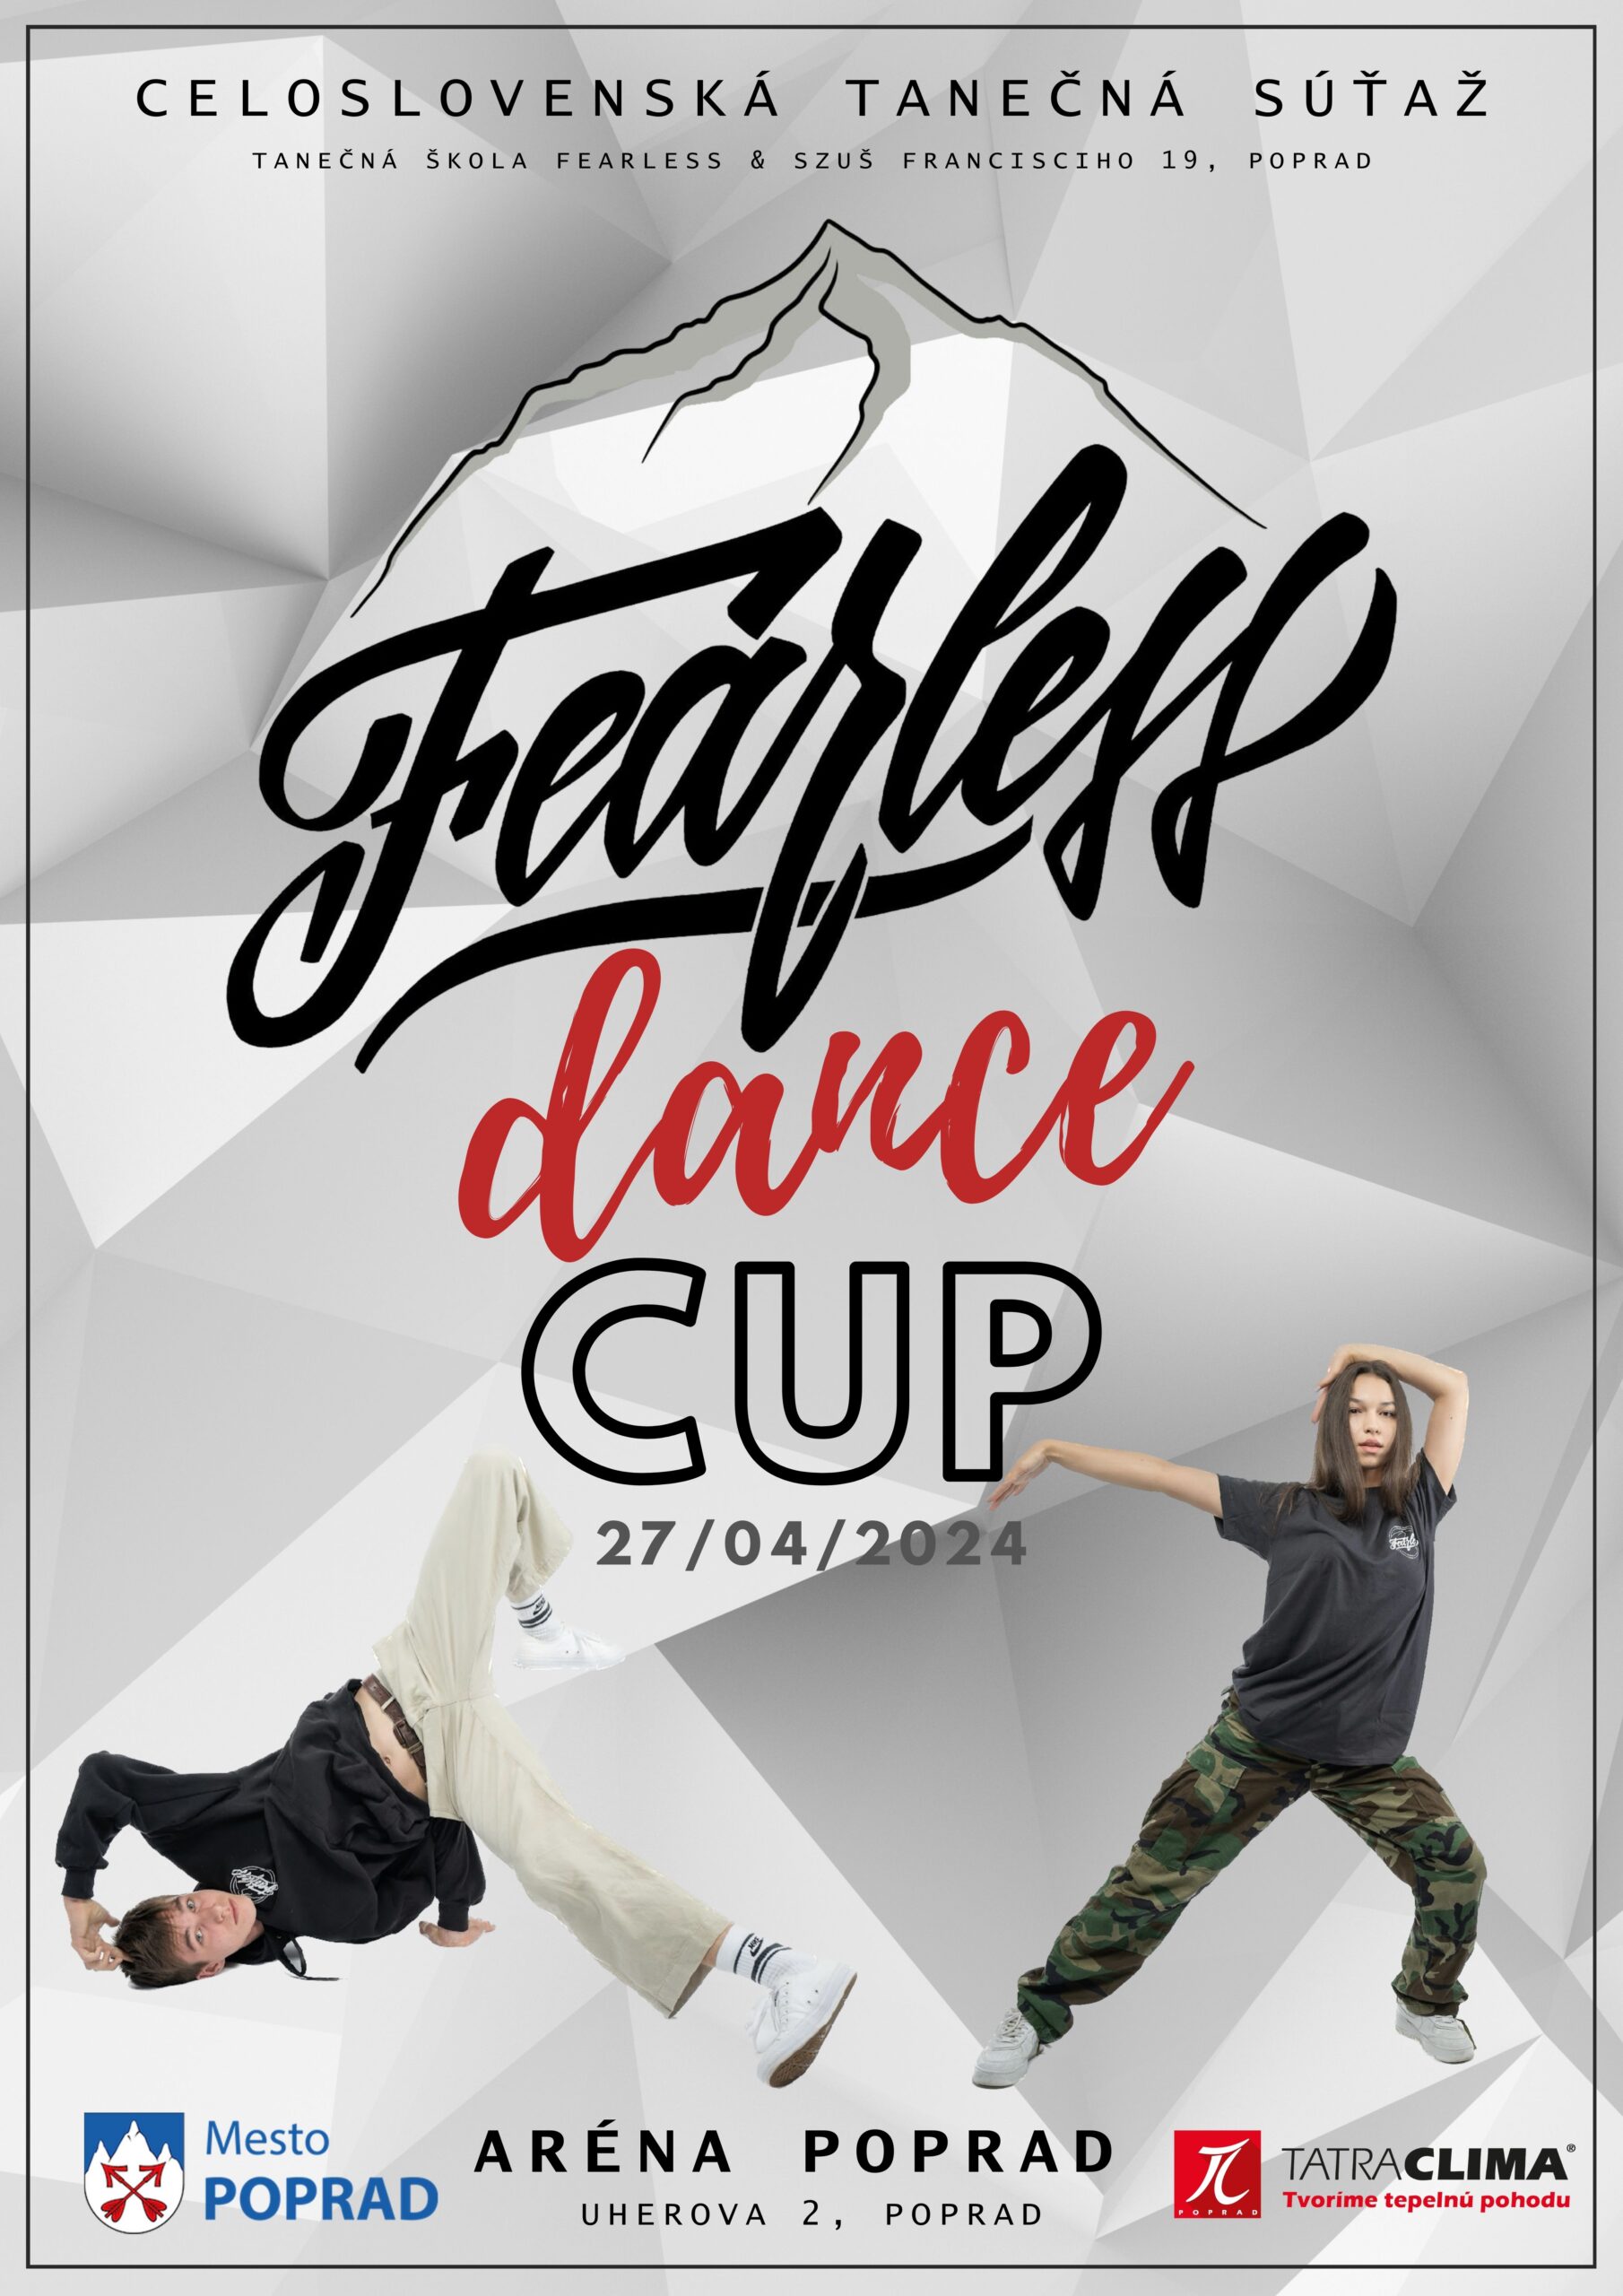 Fearless dance cup - Celoslovenská tanečná súťaž